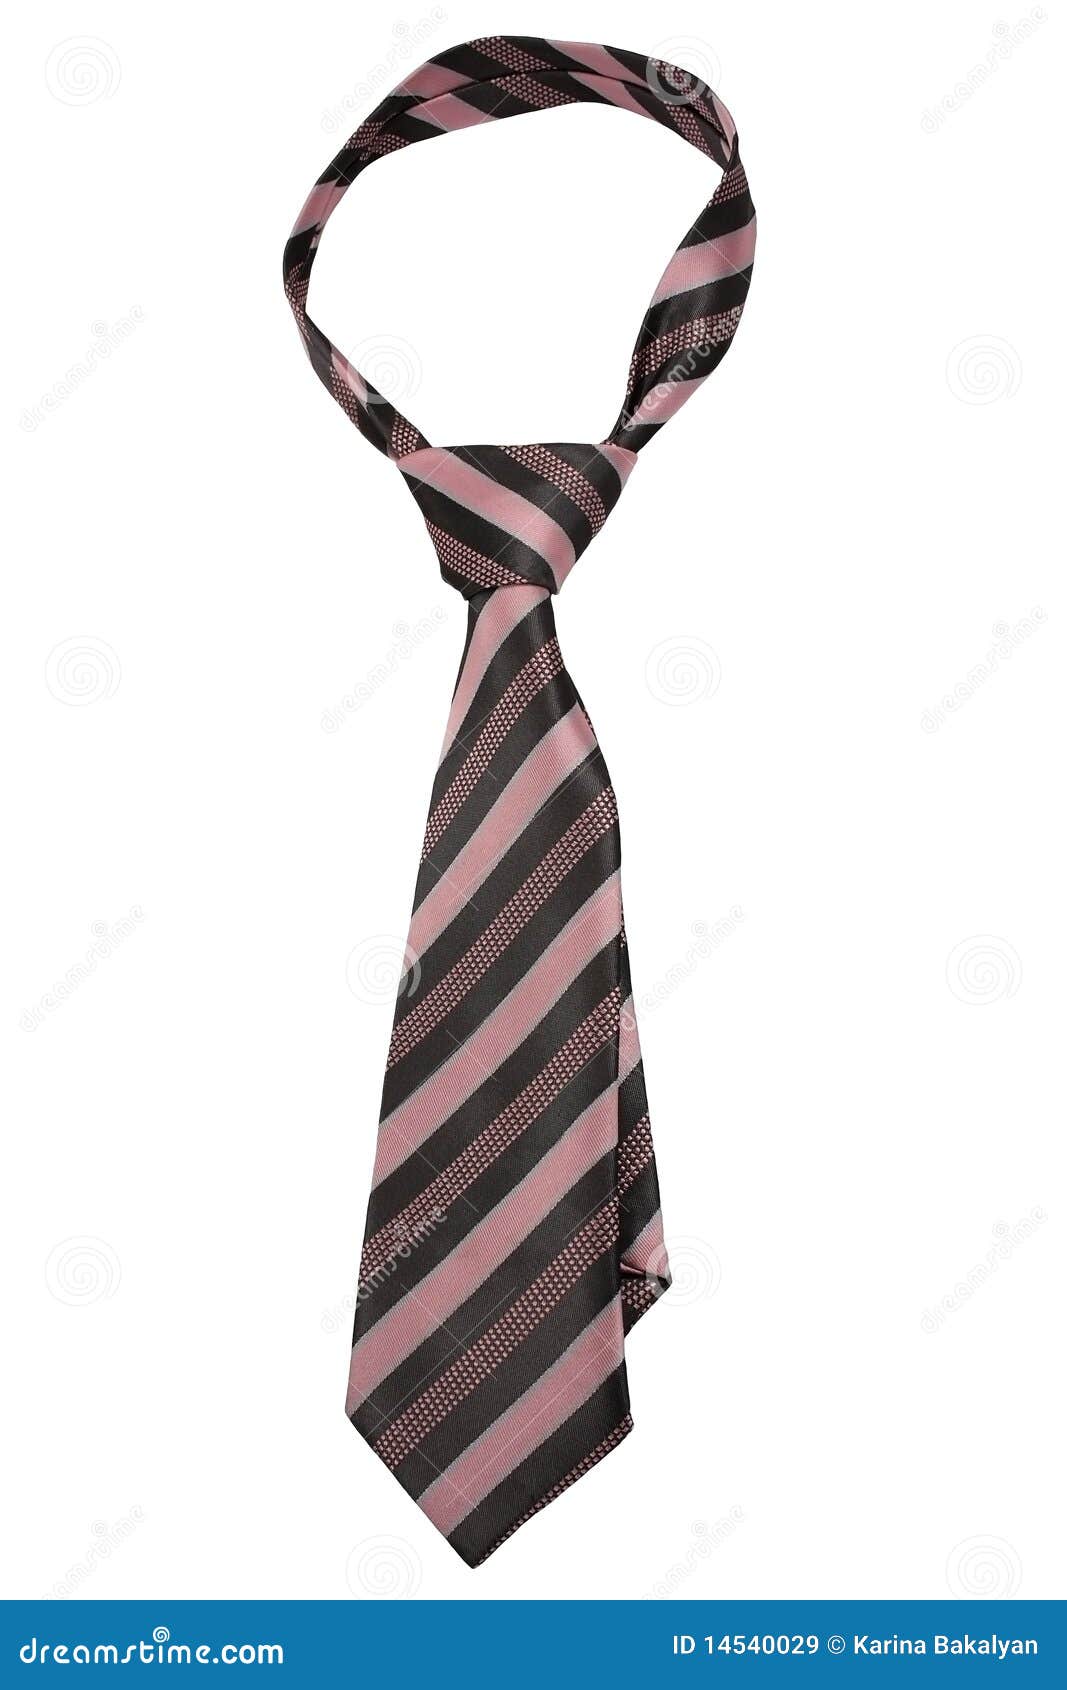 Luxury tie stock image. Image of necktie, accessory, pink - 14540029